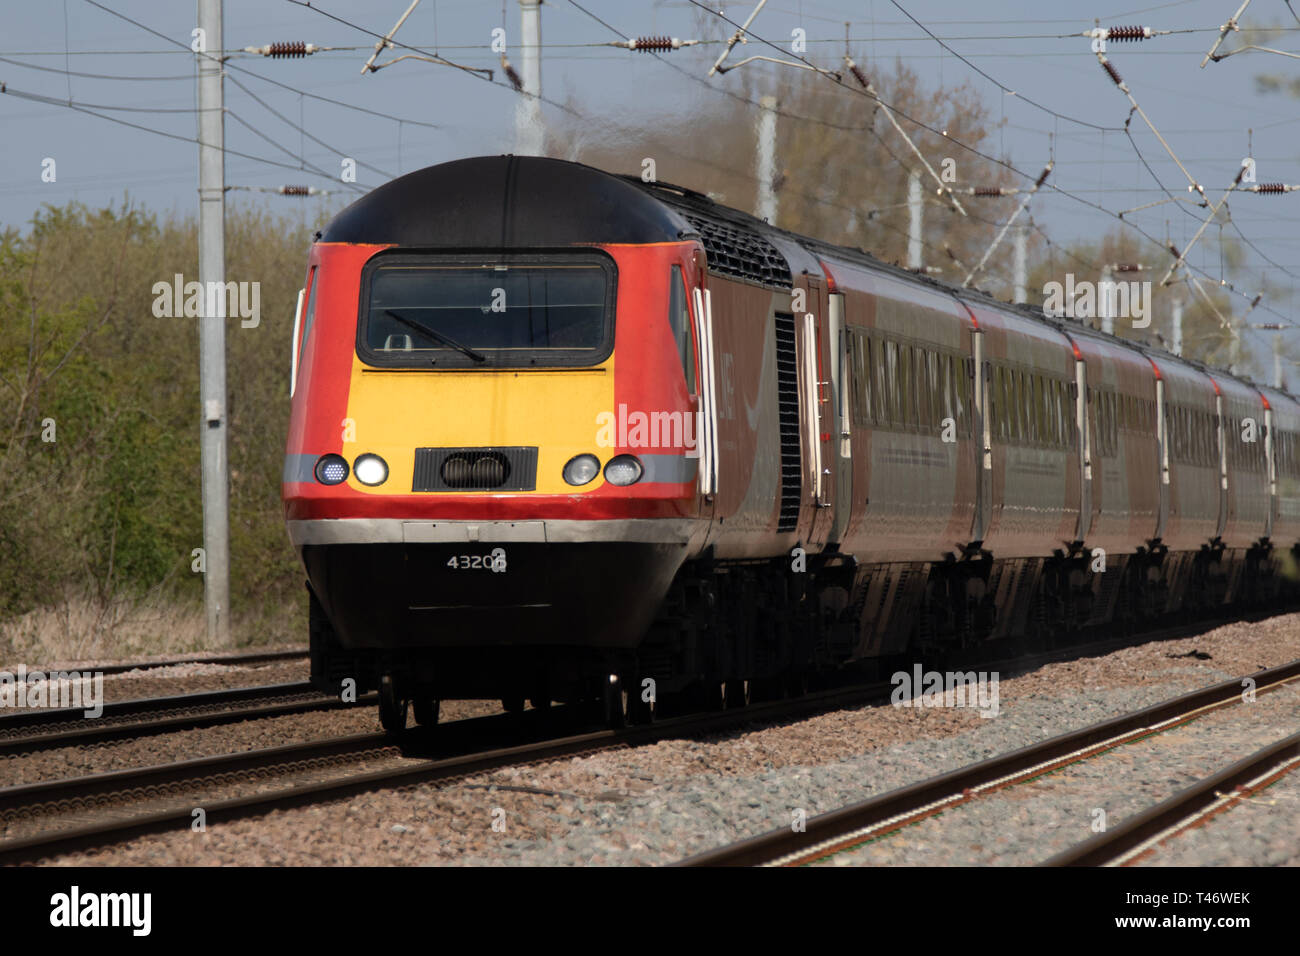 LNER High Speed Train Stock Photo